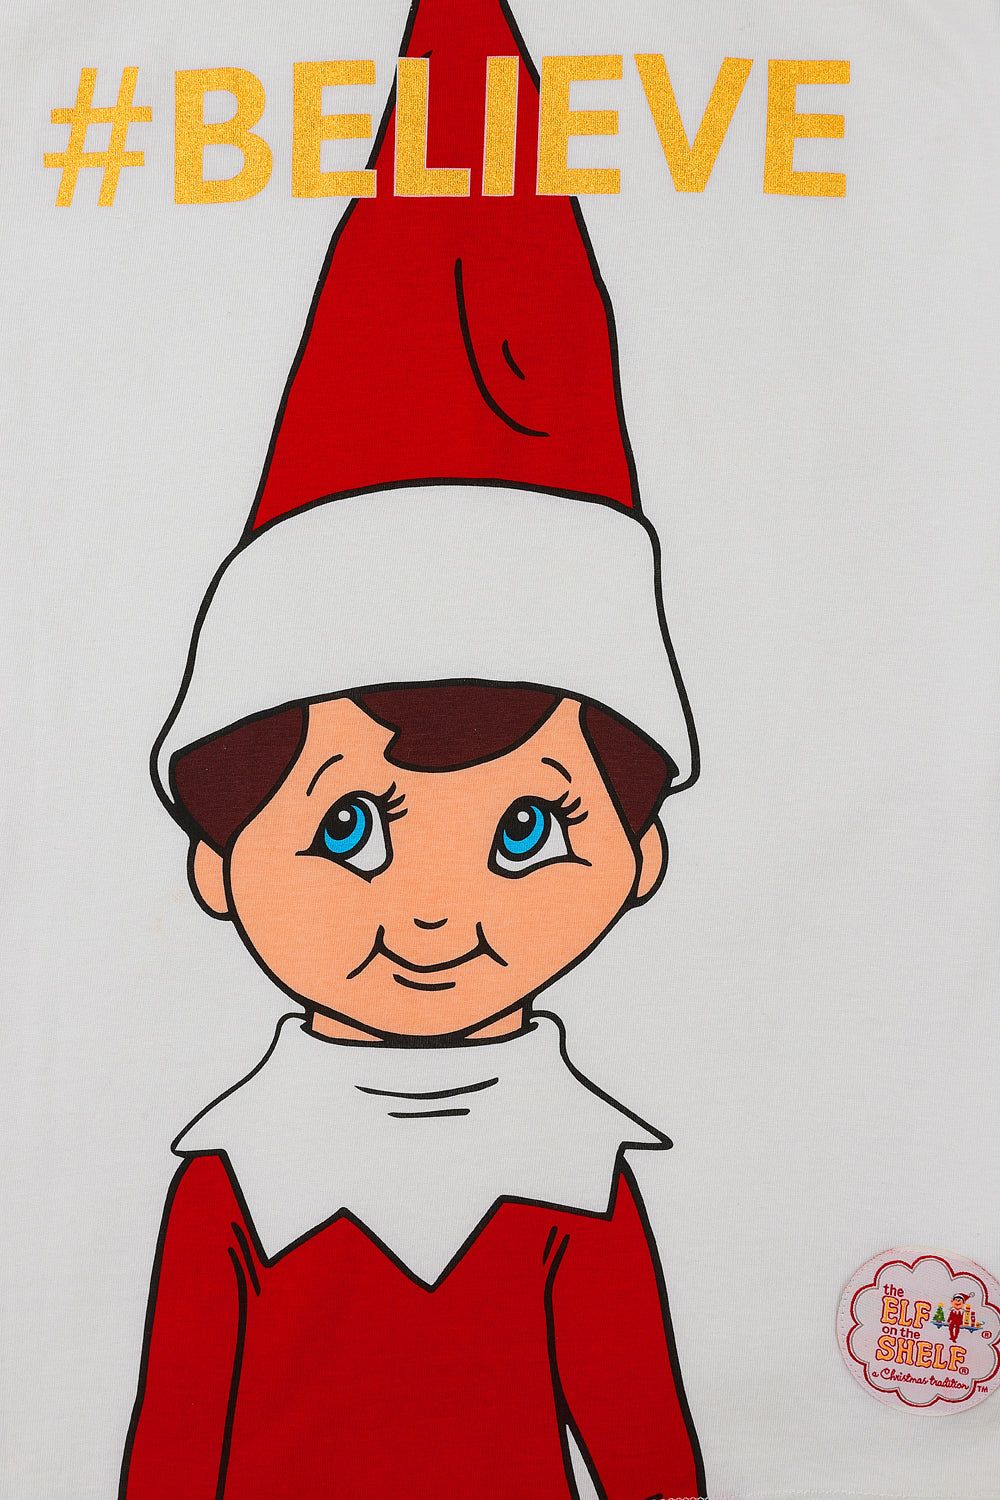 Official Elf on The Shelf Believe Christmas Matching Family Red White Pyjamas - Pyjamas.com